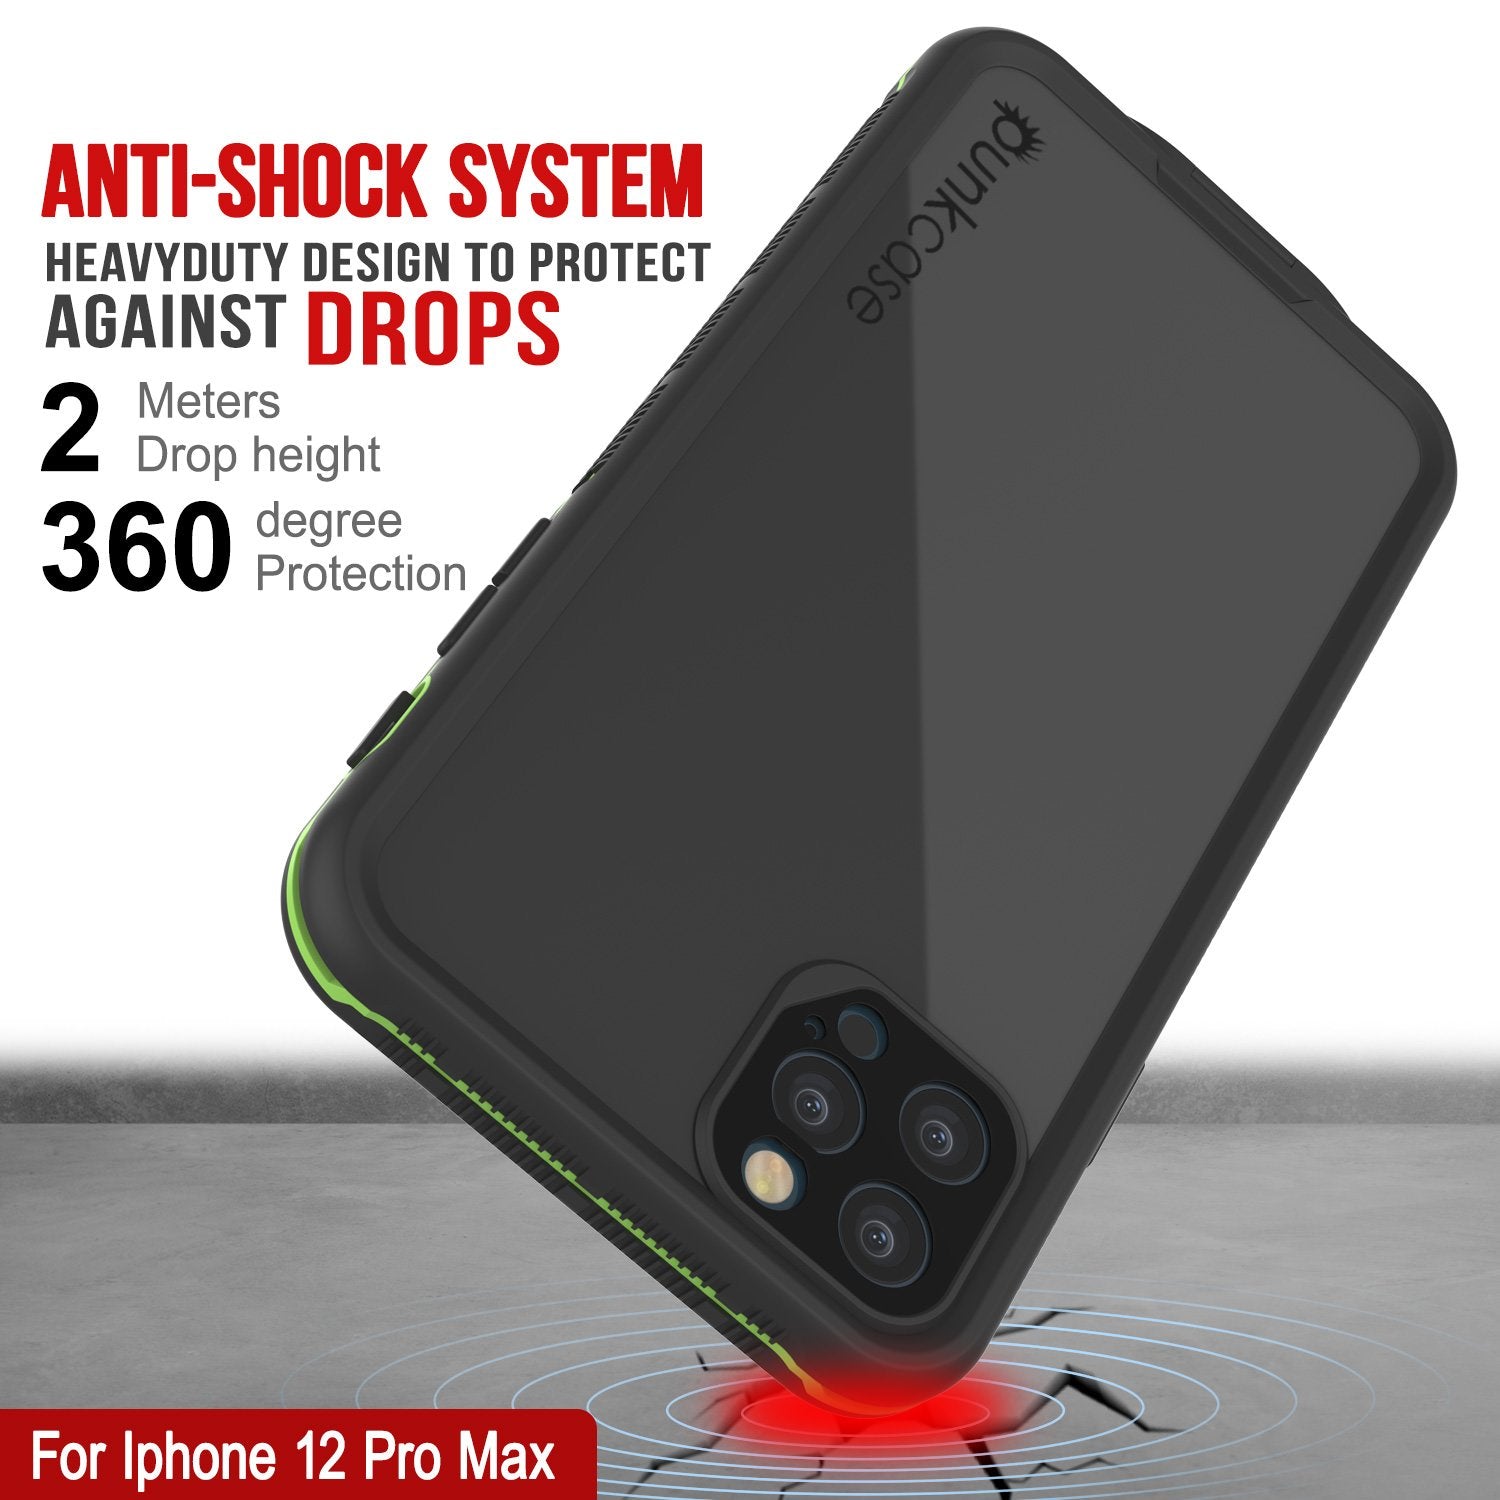 Punkcase iPhone 12 Pro Max Waterproof Case [Aqua Series] Armor Cover [Black]